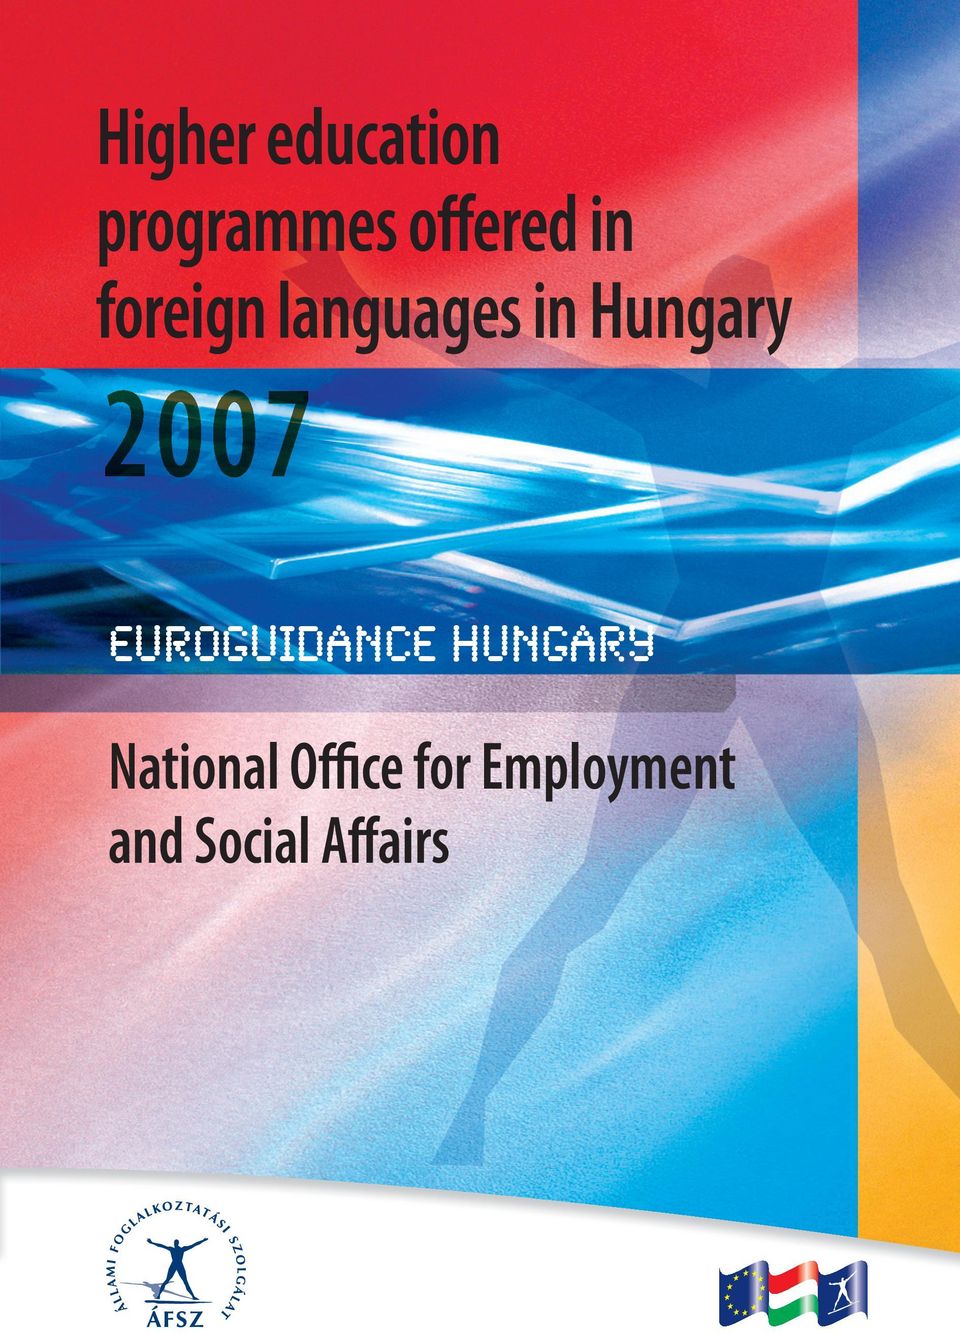 2007 Euroguidance Hungary National